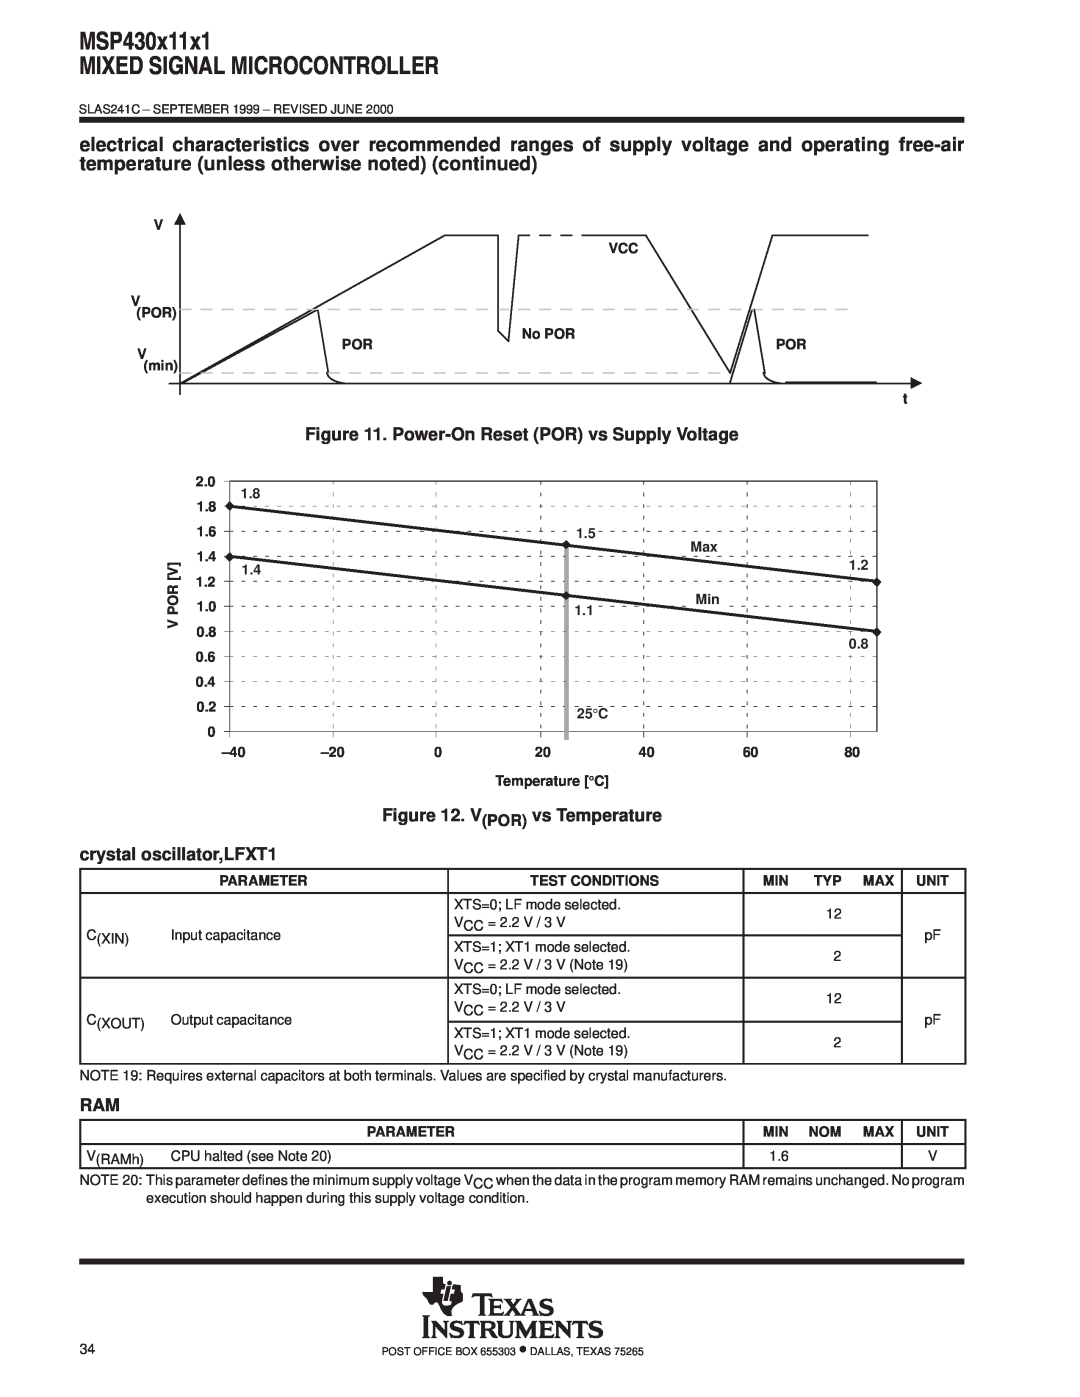 Texas Instruments MSP430x11x1 warranty Power-On Reset POR vs Supply Voltage, VPOR vs Temperature crystal oscillator,LFXT1 